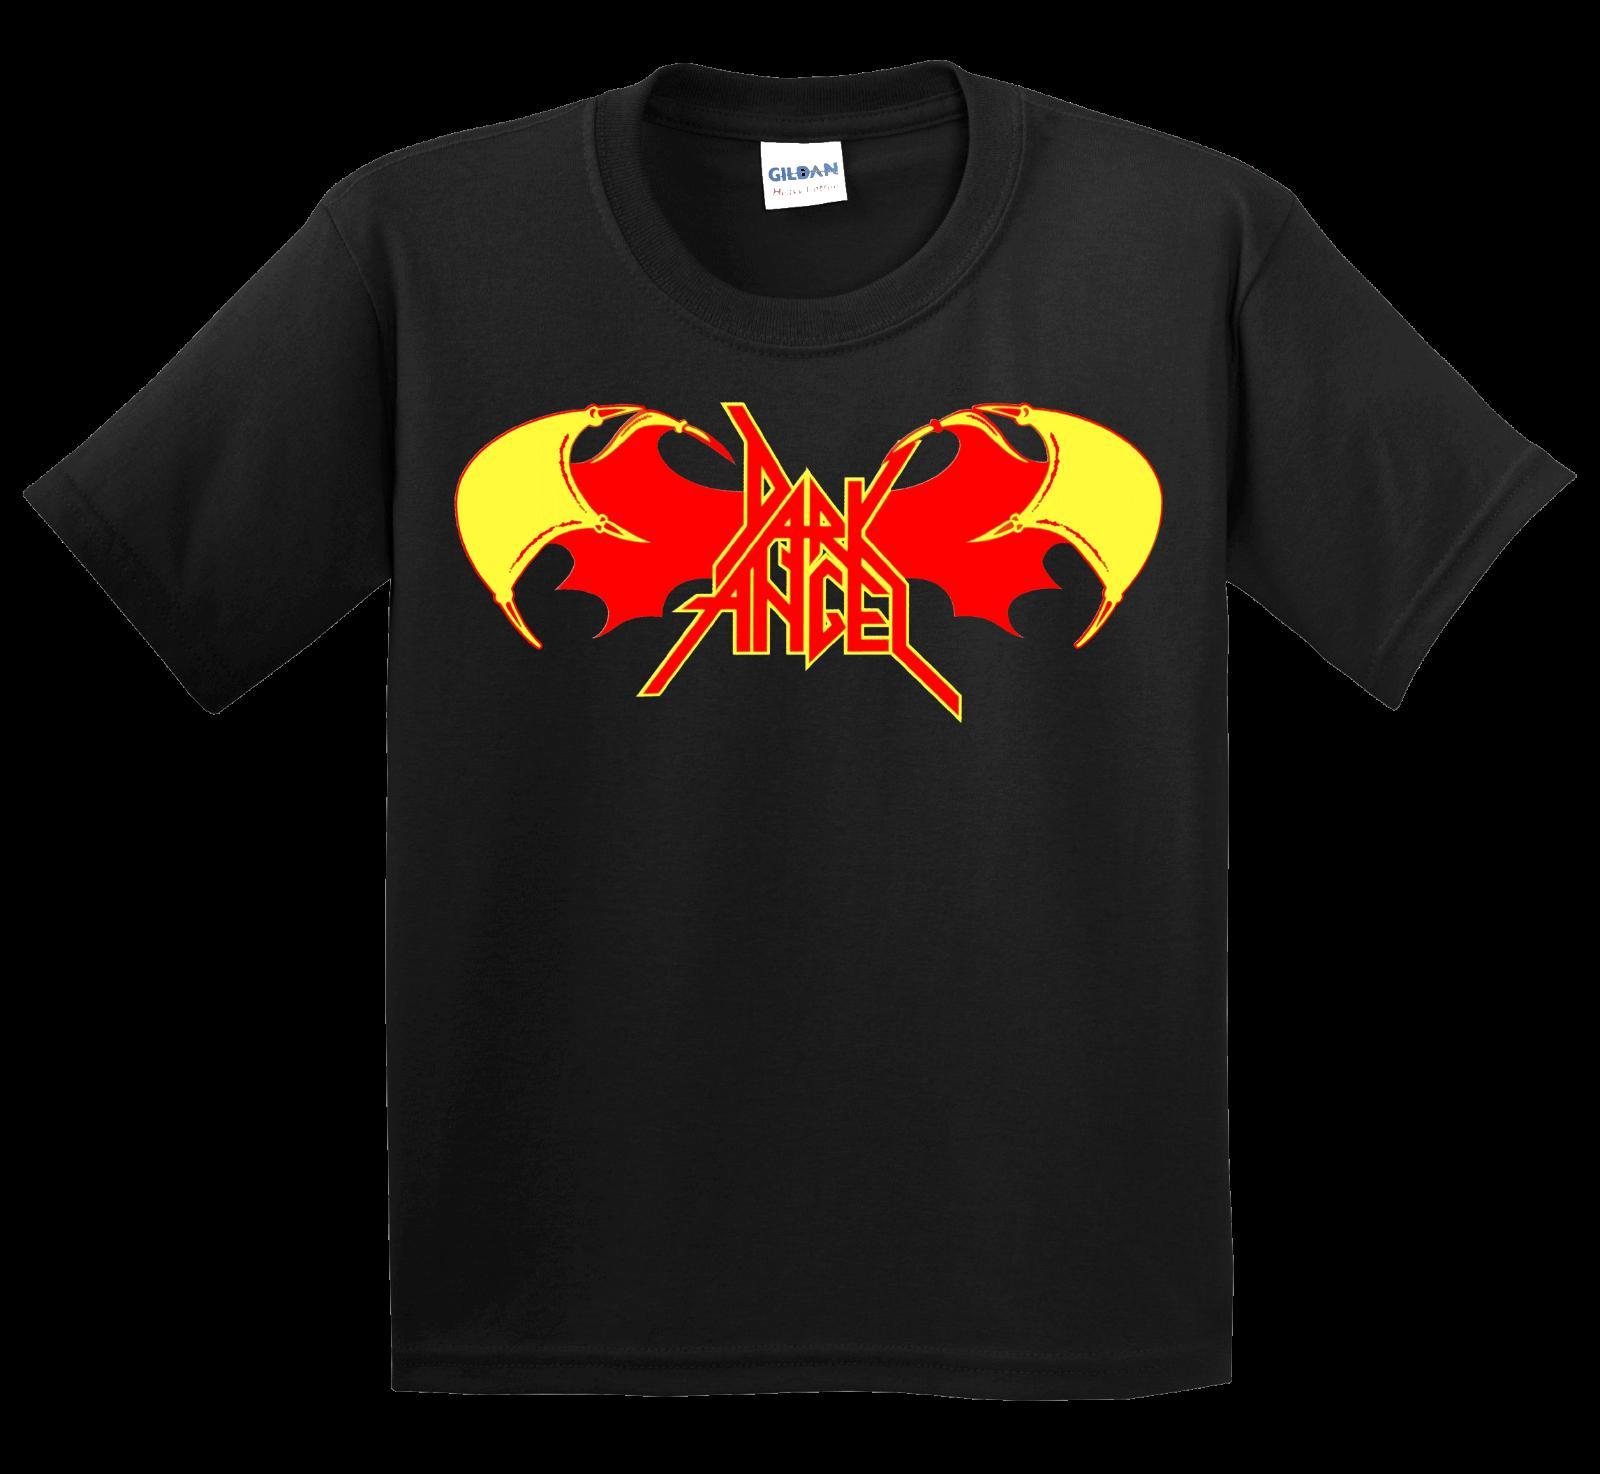 Dark Angel Clothing Logo - Dark Angel We Have Arrived T Shirt New Death Metal Speed Thrash